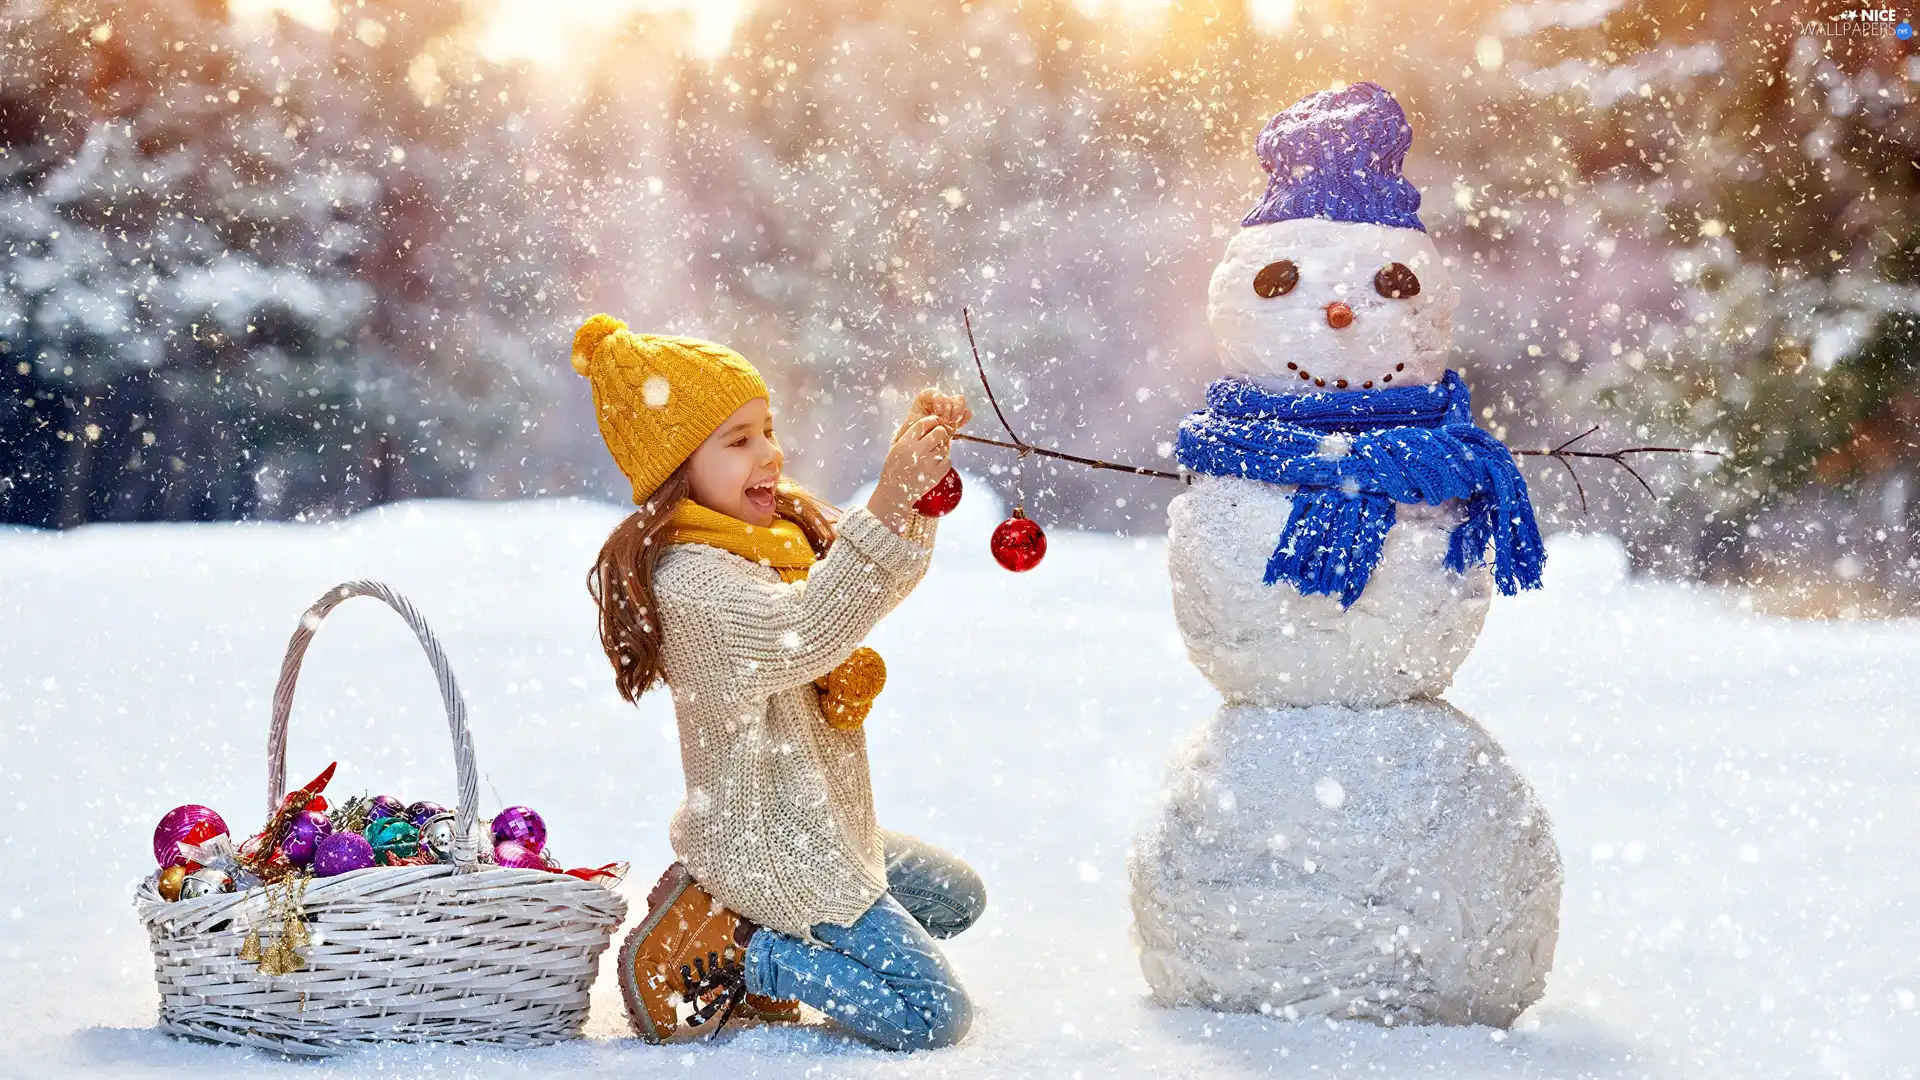 basket, ornamentation, winter, Snowman, girl